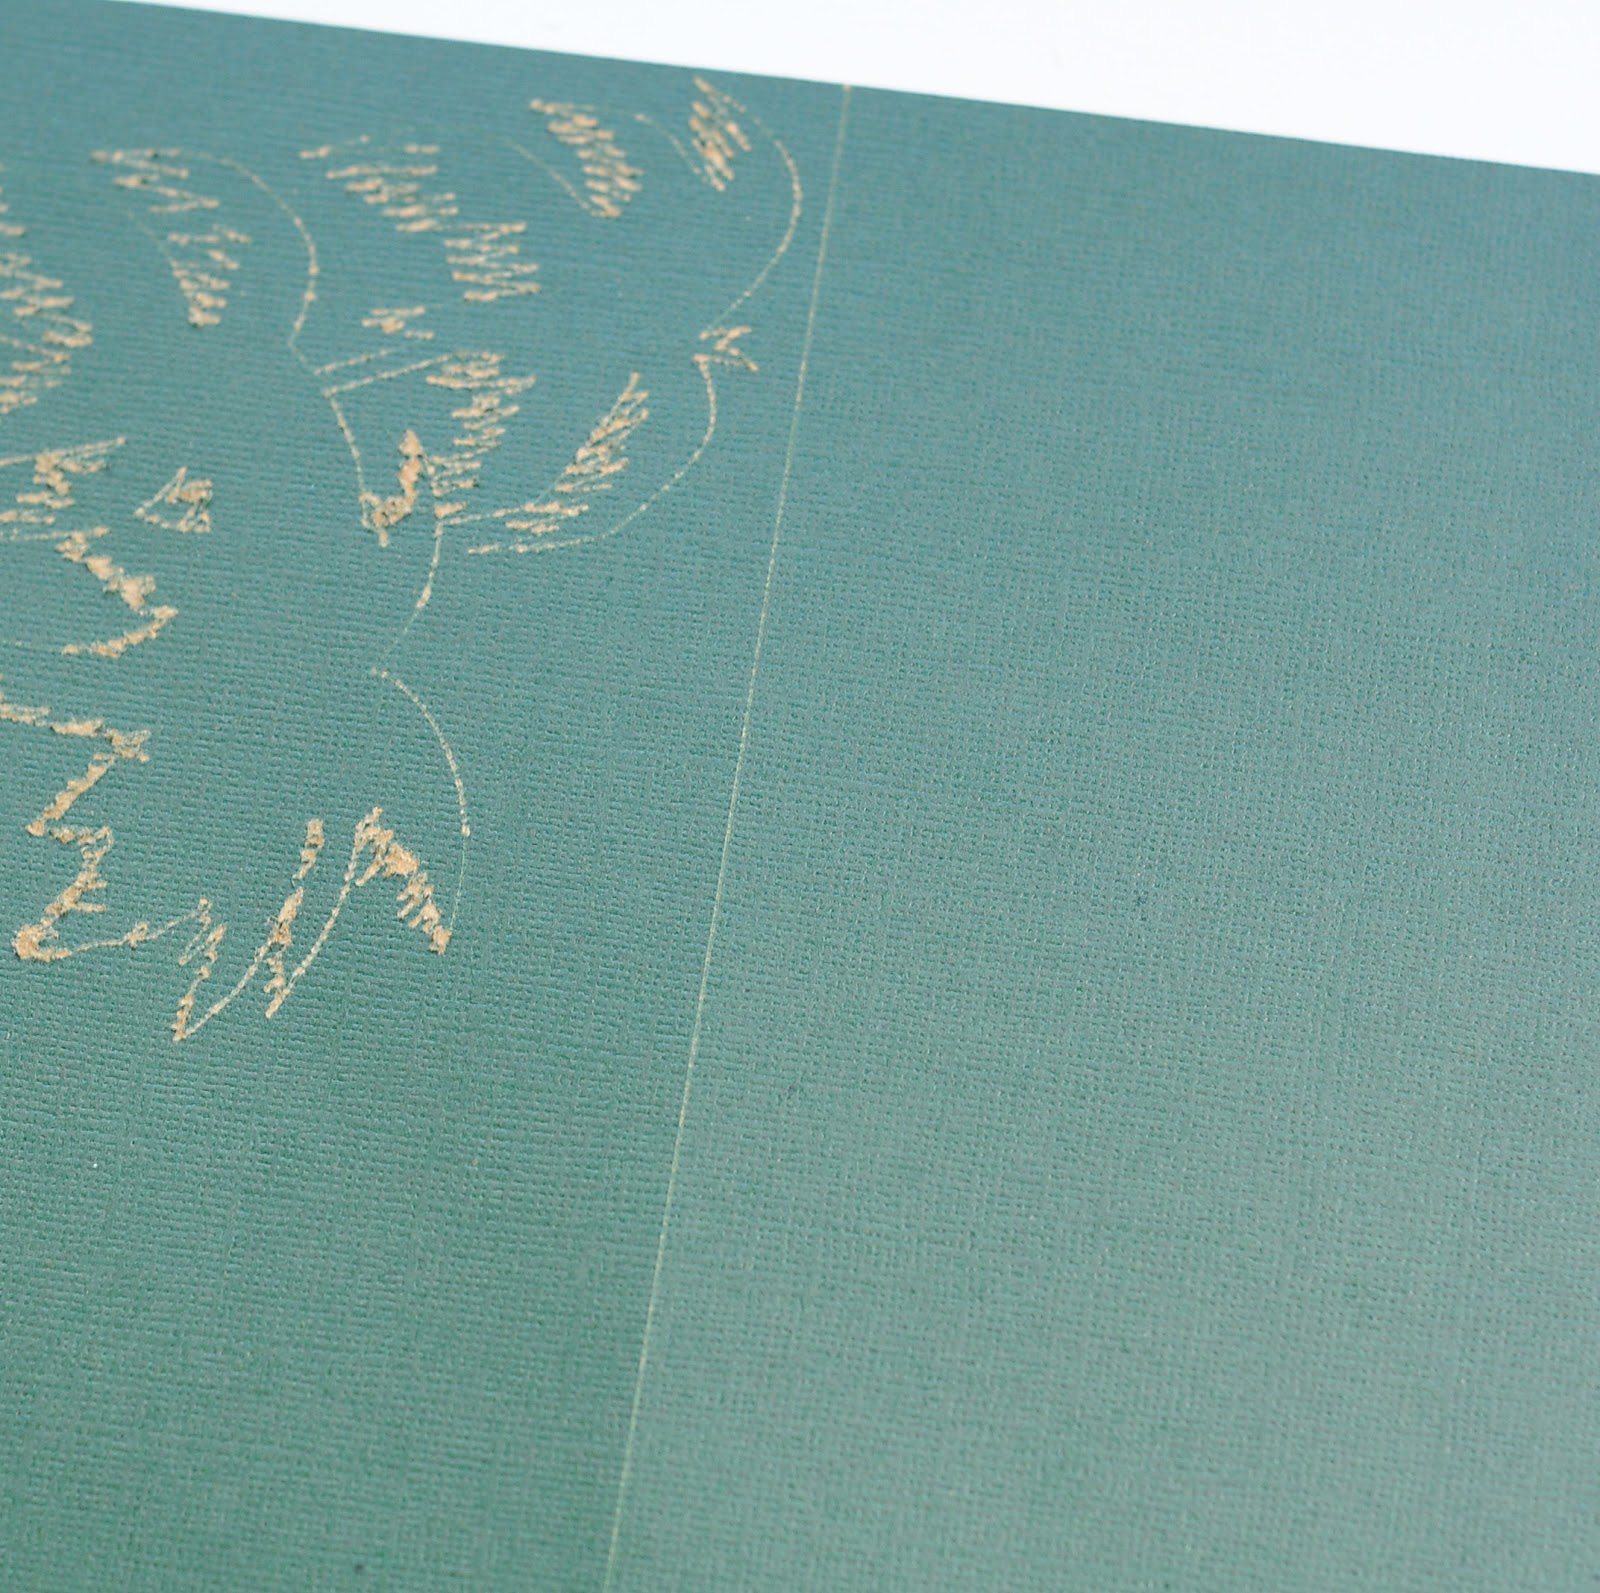 Amy Chomas: Palm tree card with Chomas Creations engraving tip